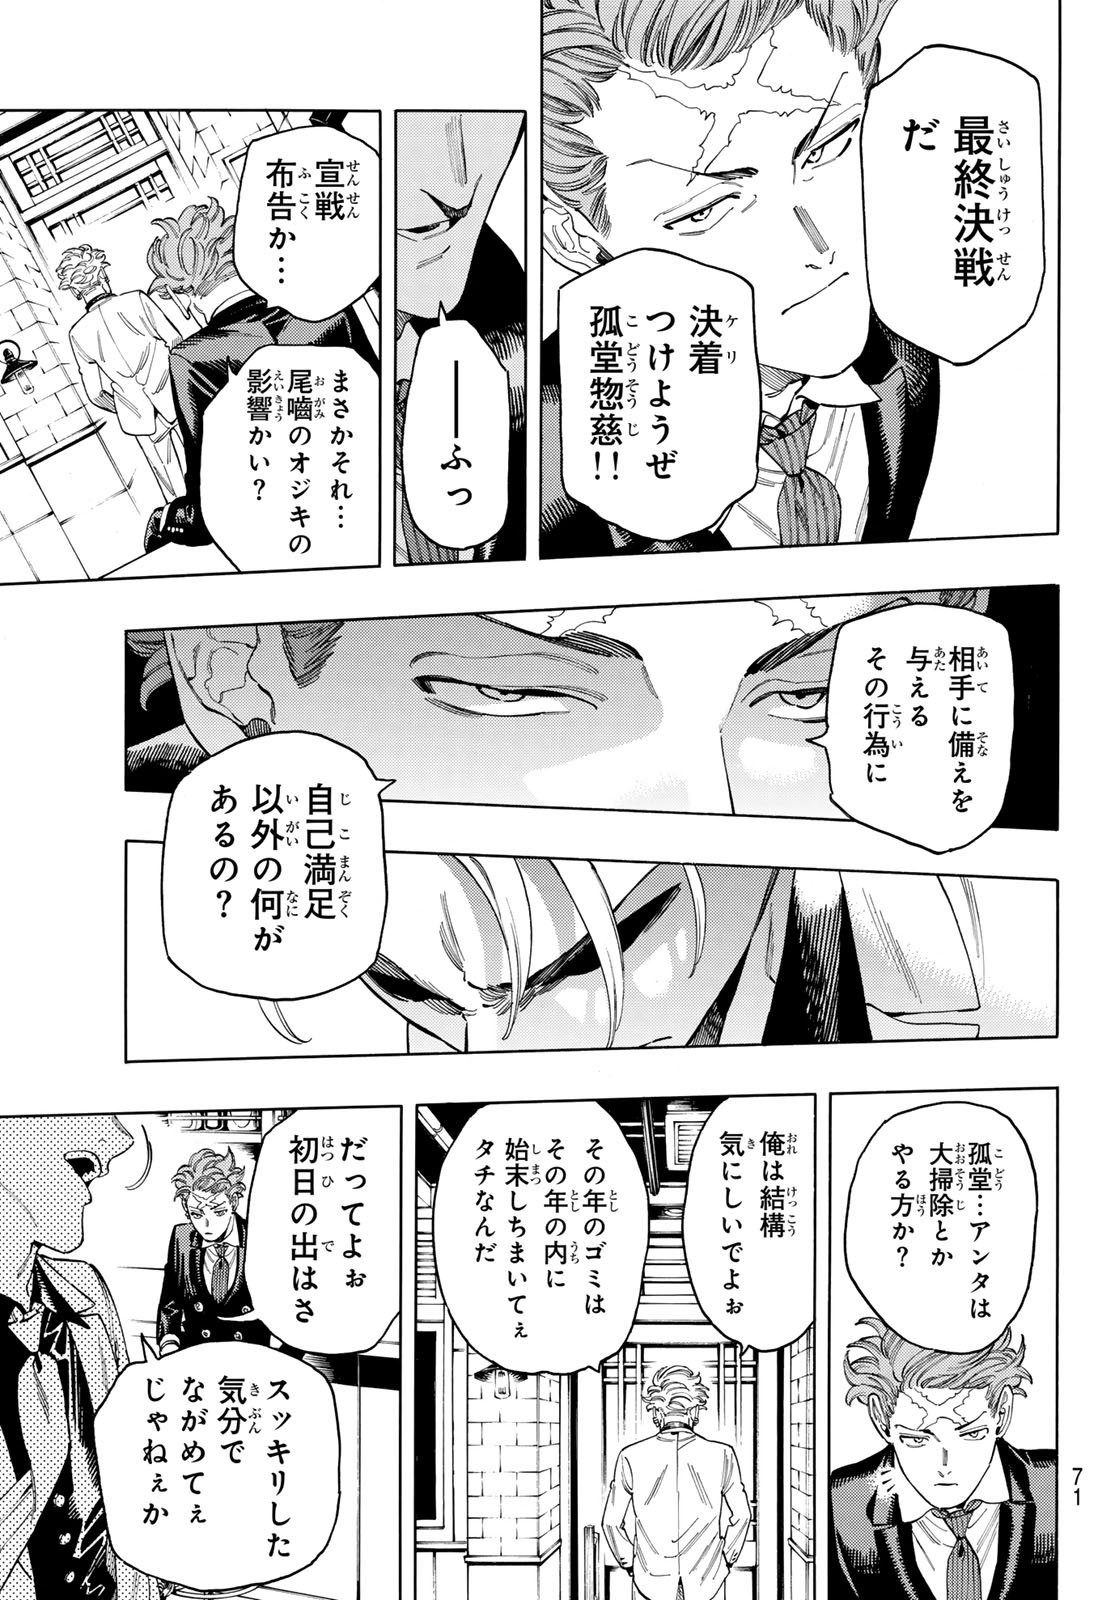 Akabane Honeko no Bodyguard - Chapter 85 - Page 13